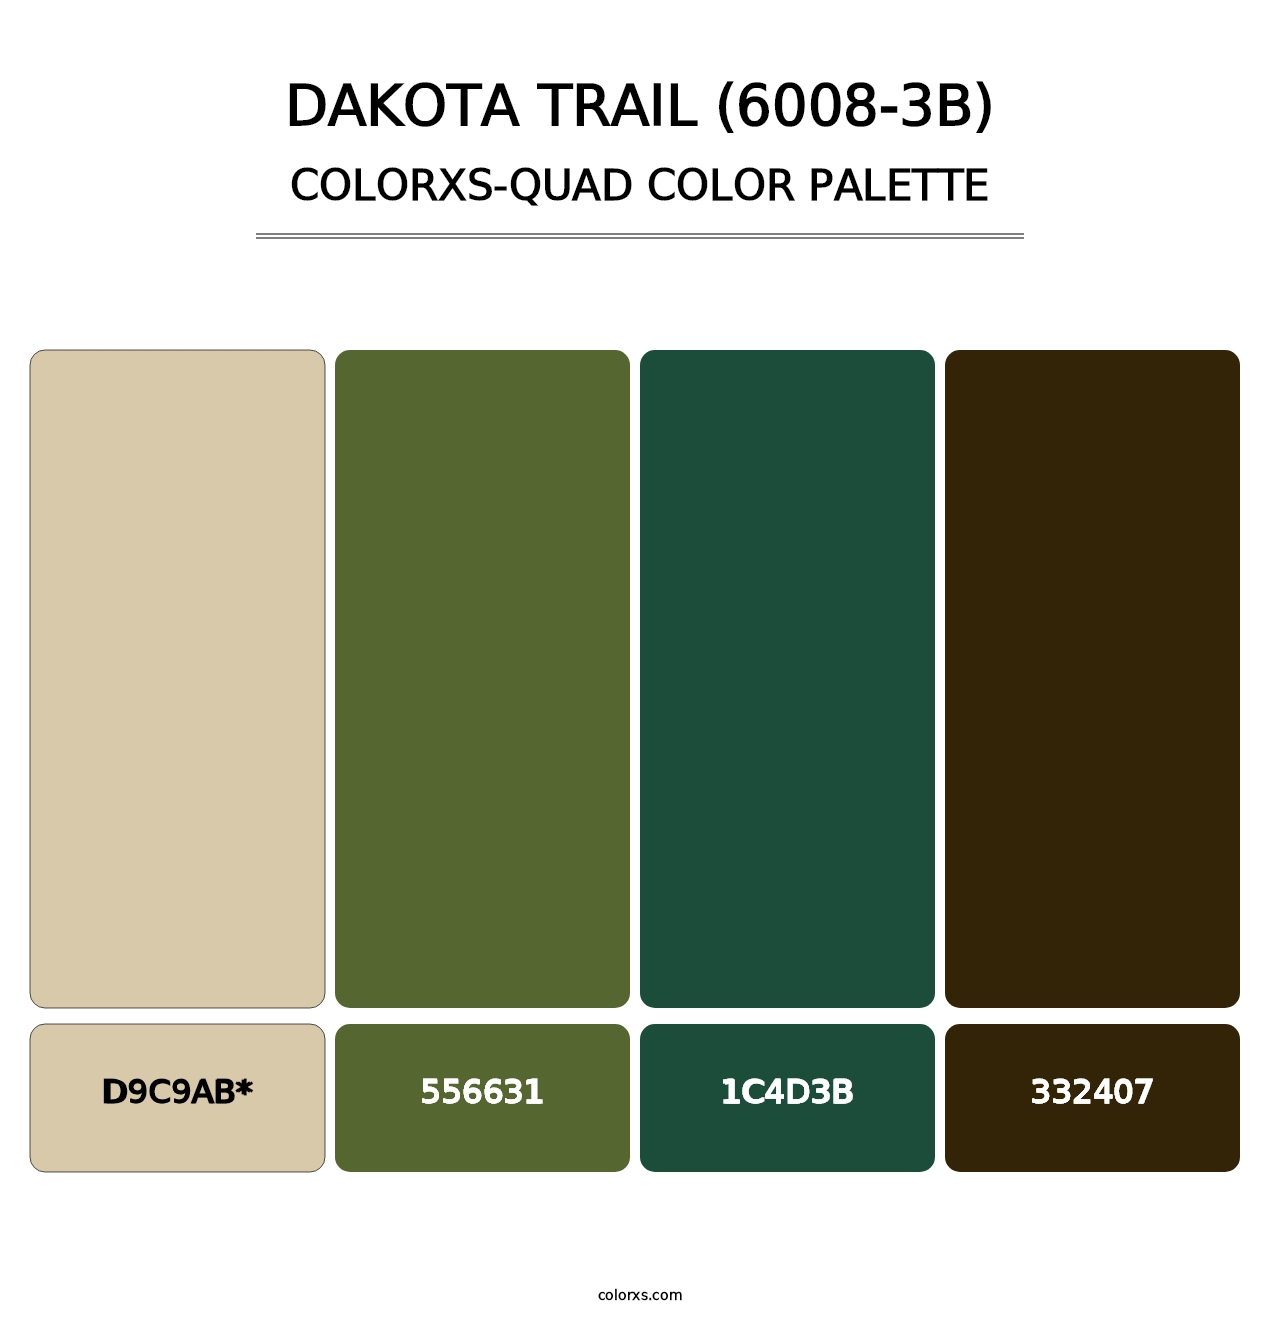 Dakota Trail (6008-3B) - Colorxs Quad Palette